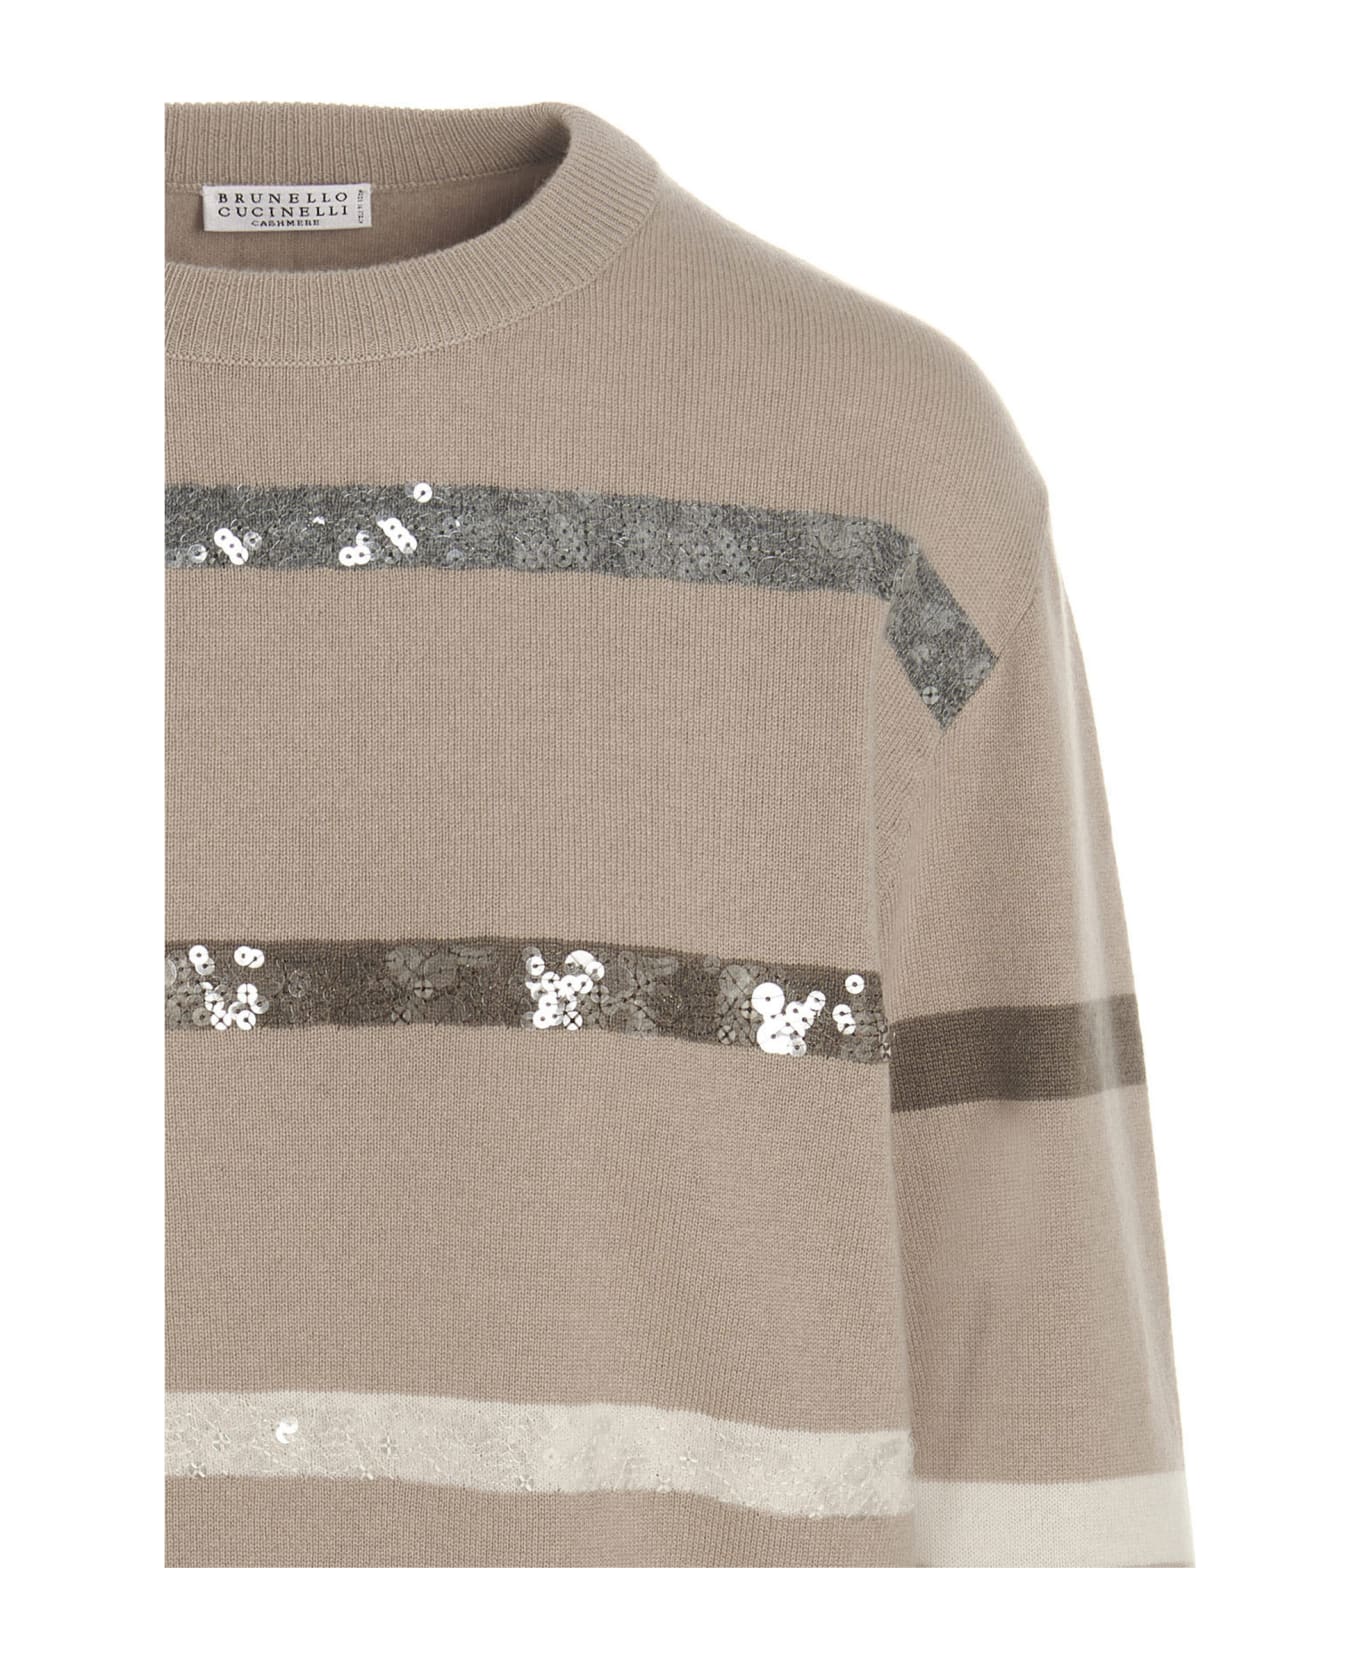 Brunello Cucinelli Sequin Stripe Sweater - Beige